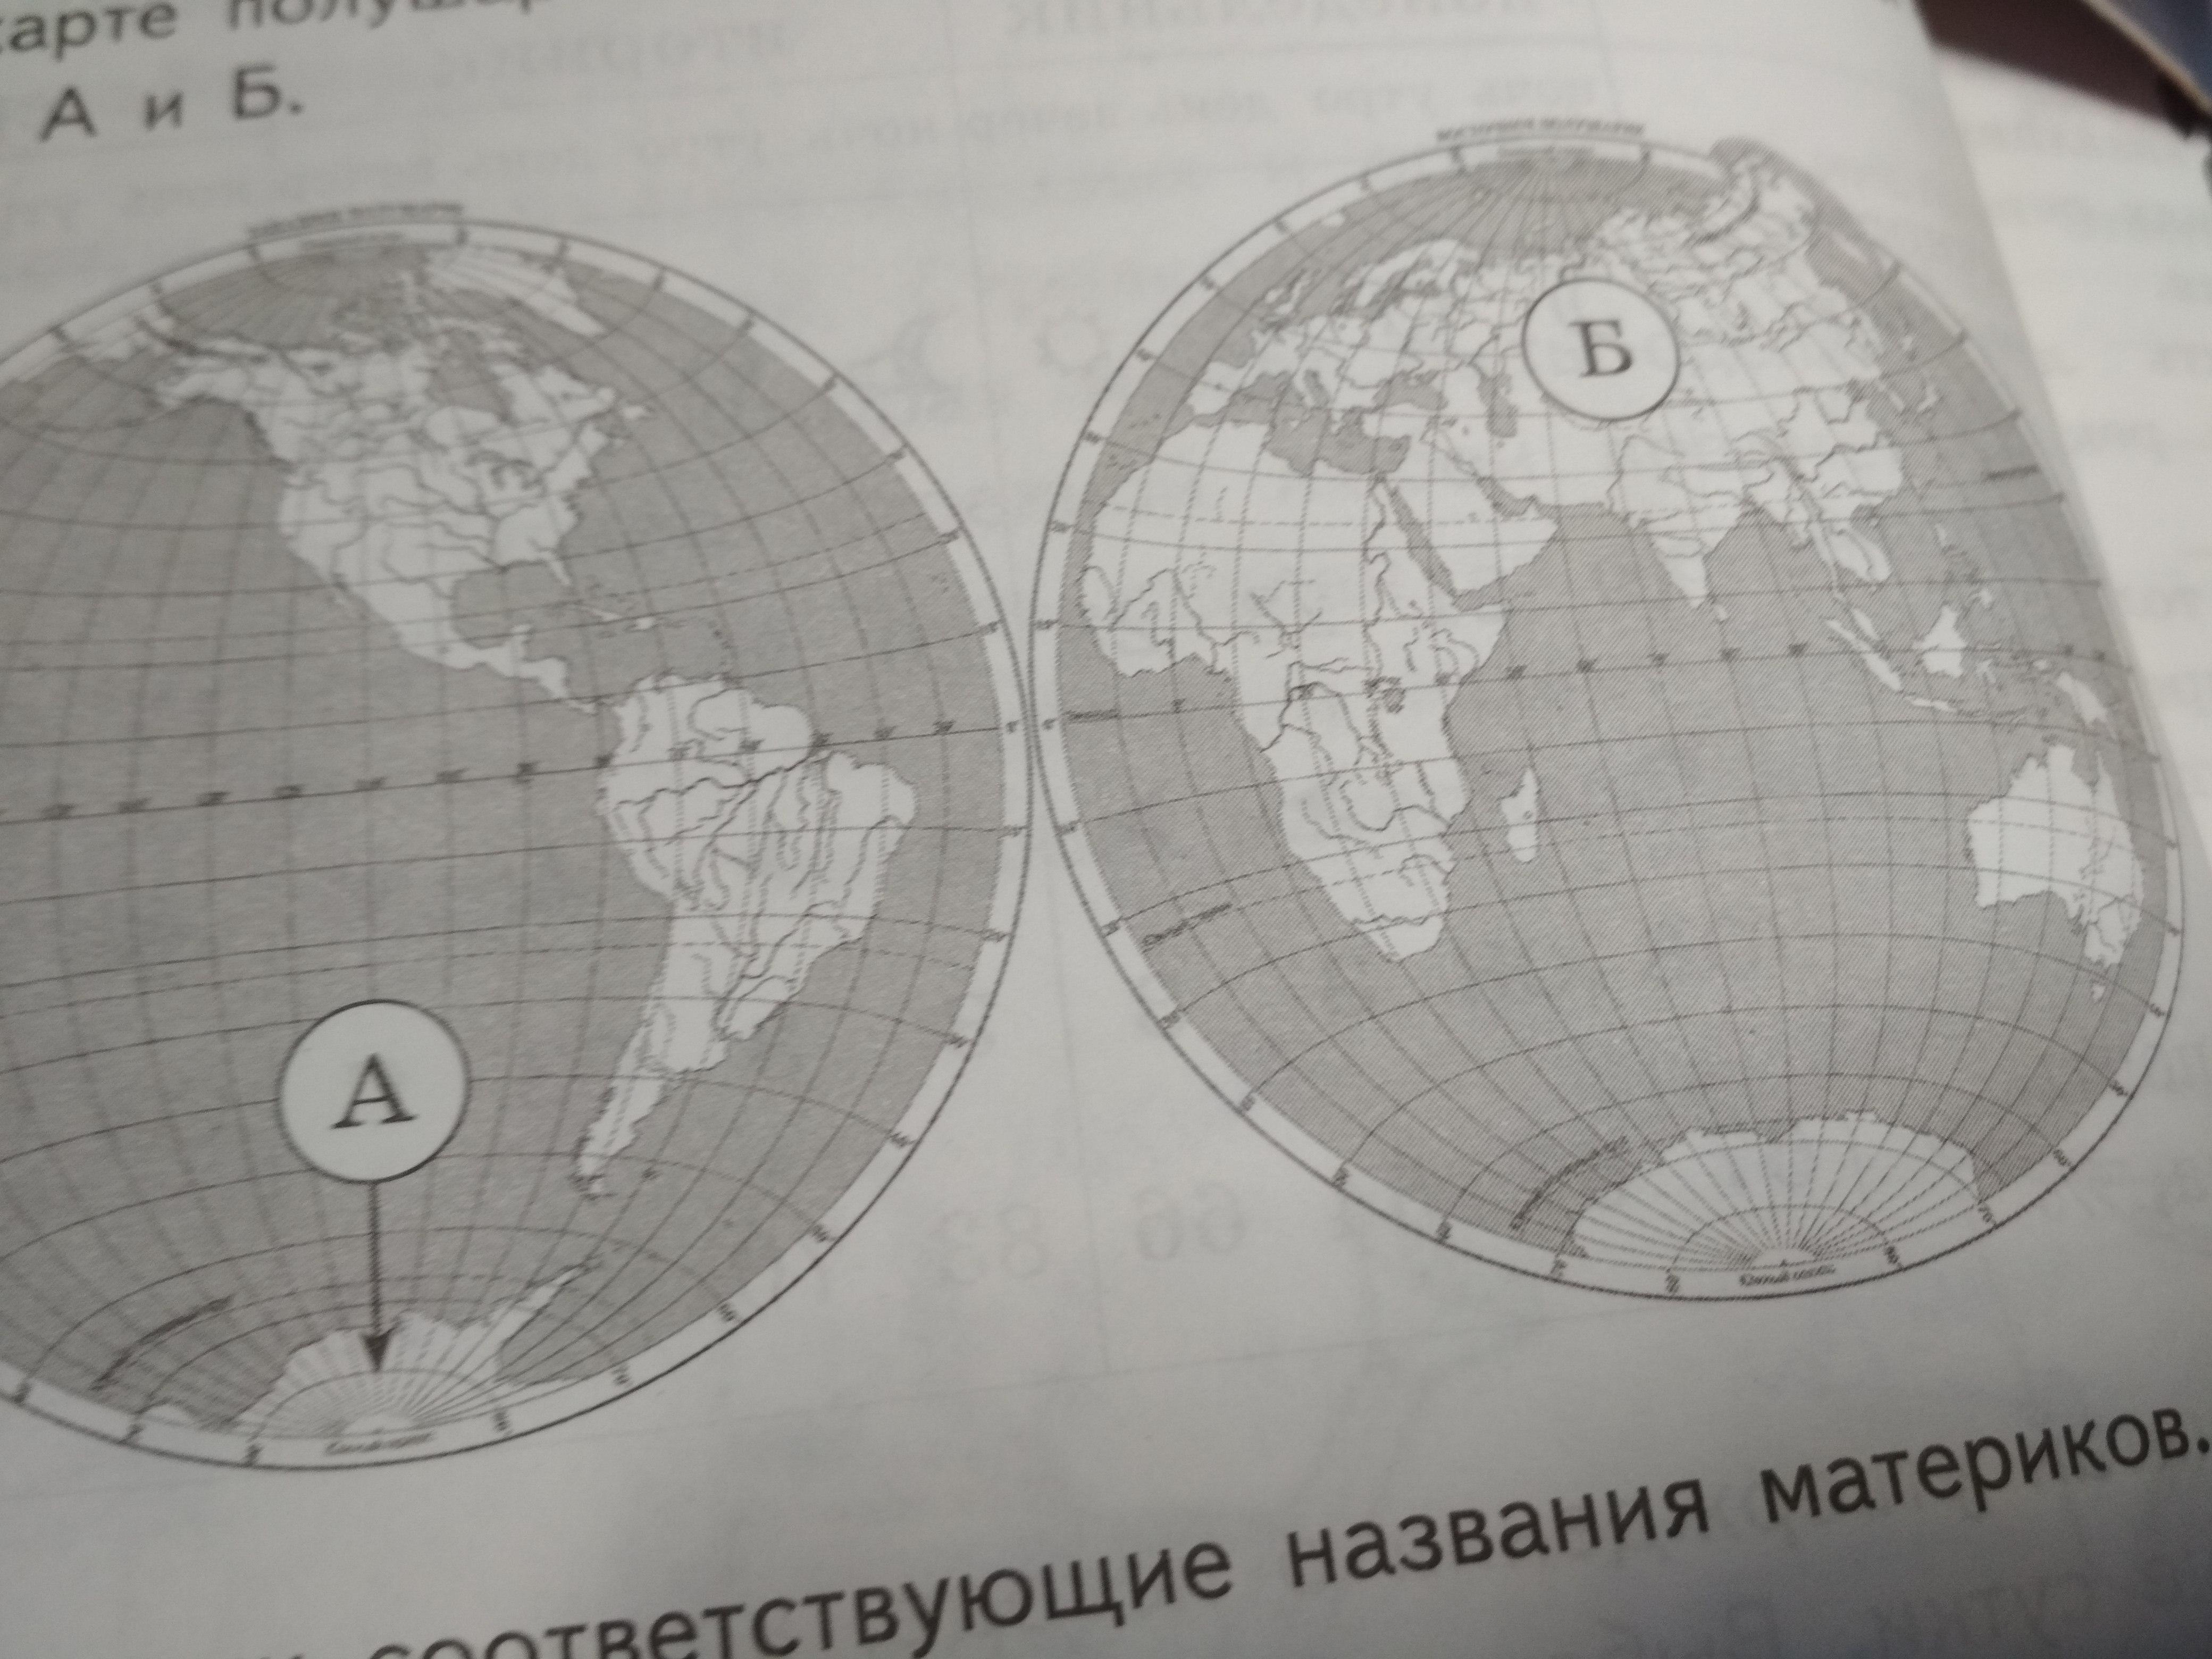 На карте полушарий земли два материка обозначены буквами а и б. Два материка. На карте полушарий земли 2 материка обозначены. На карте полушарий земли 2 материка обозначены буквами а и б.